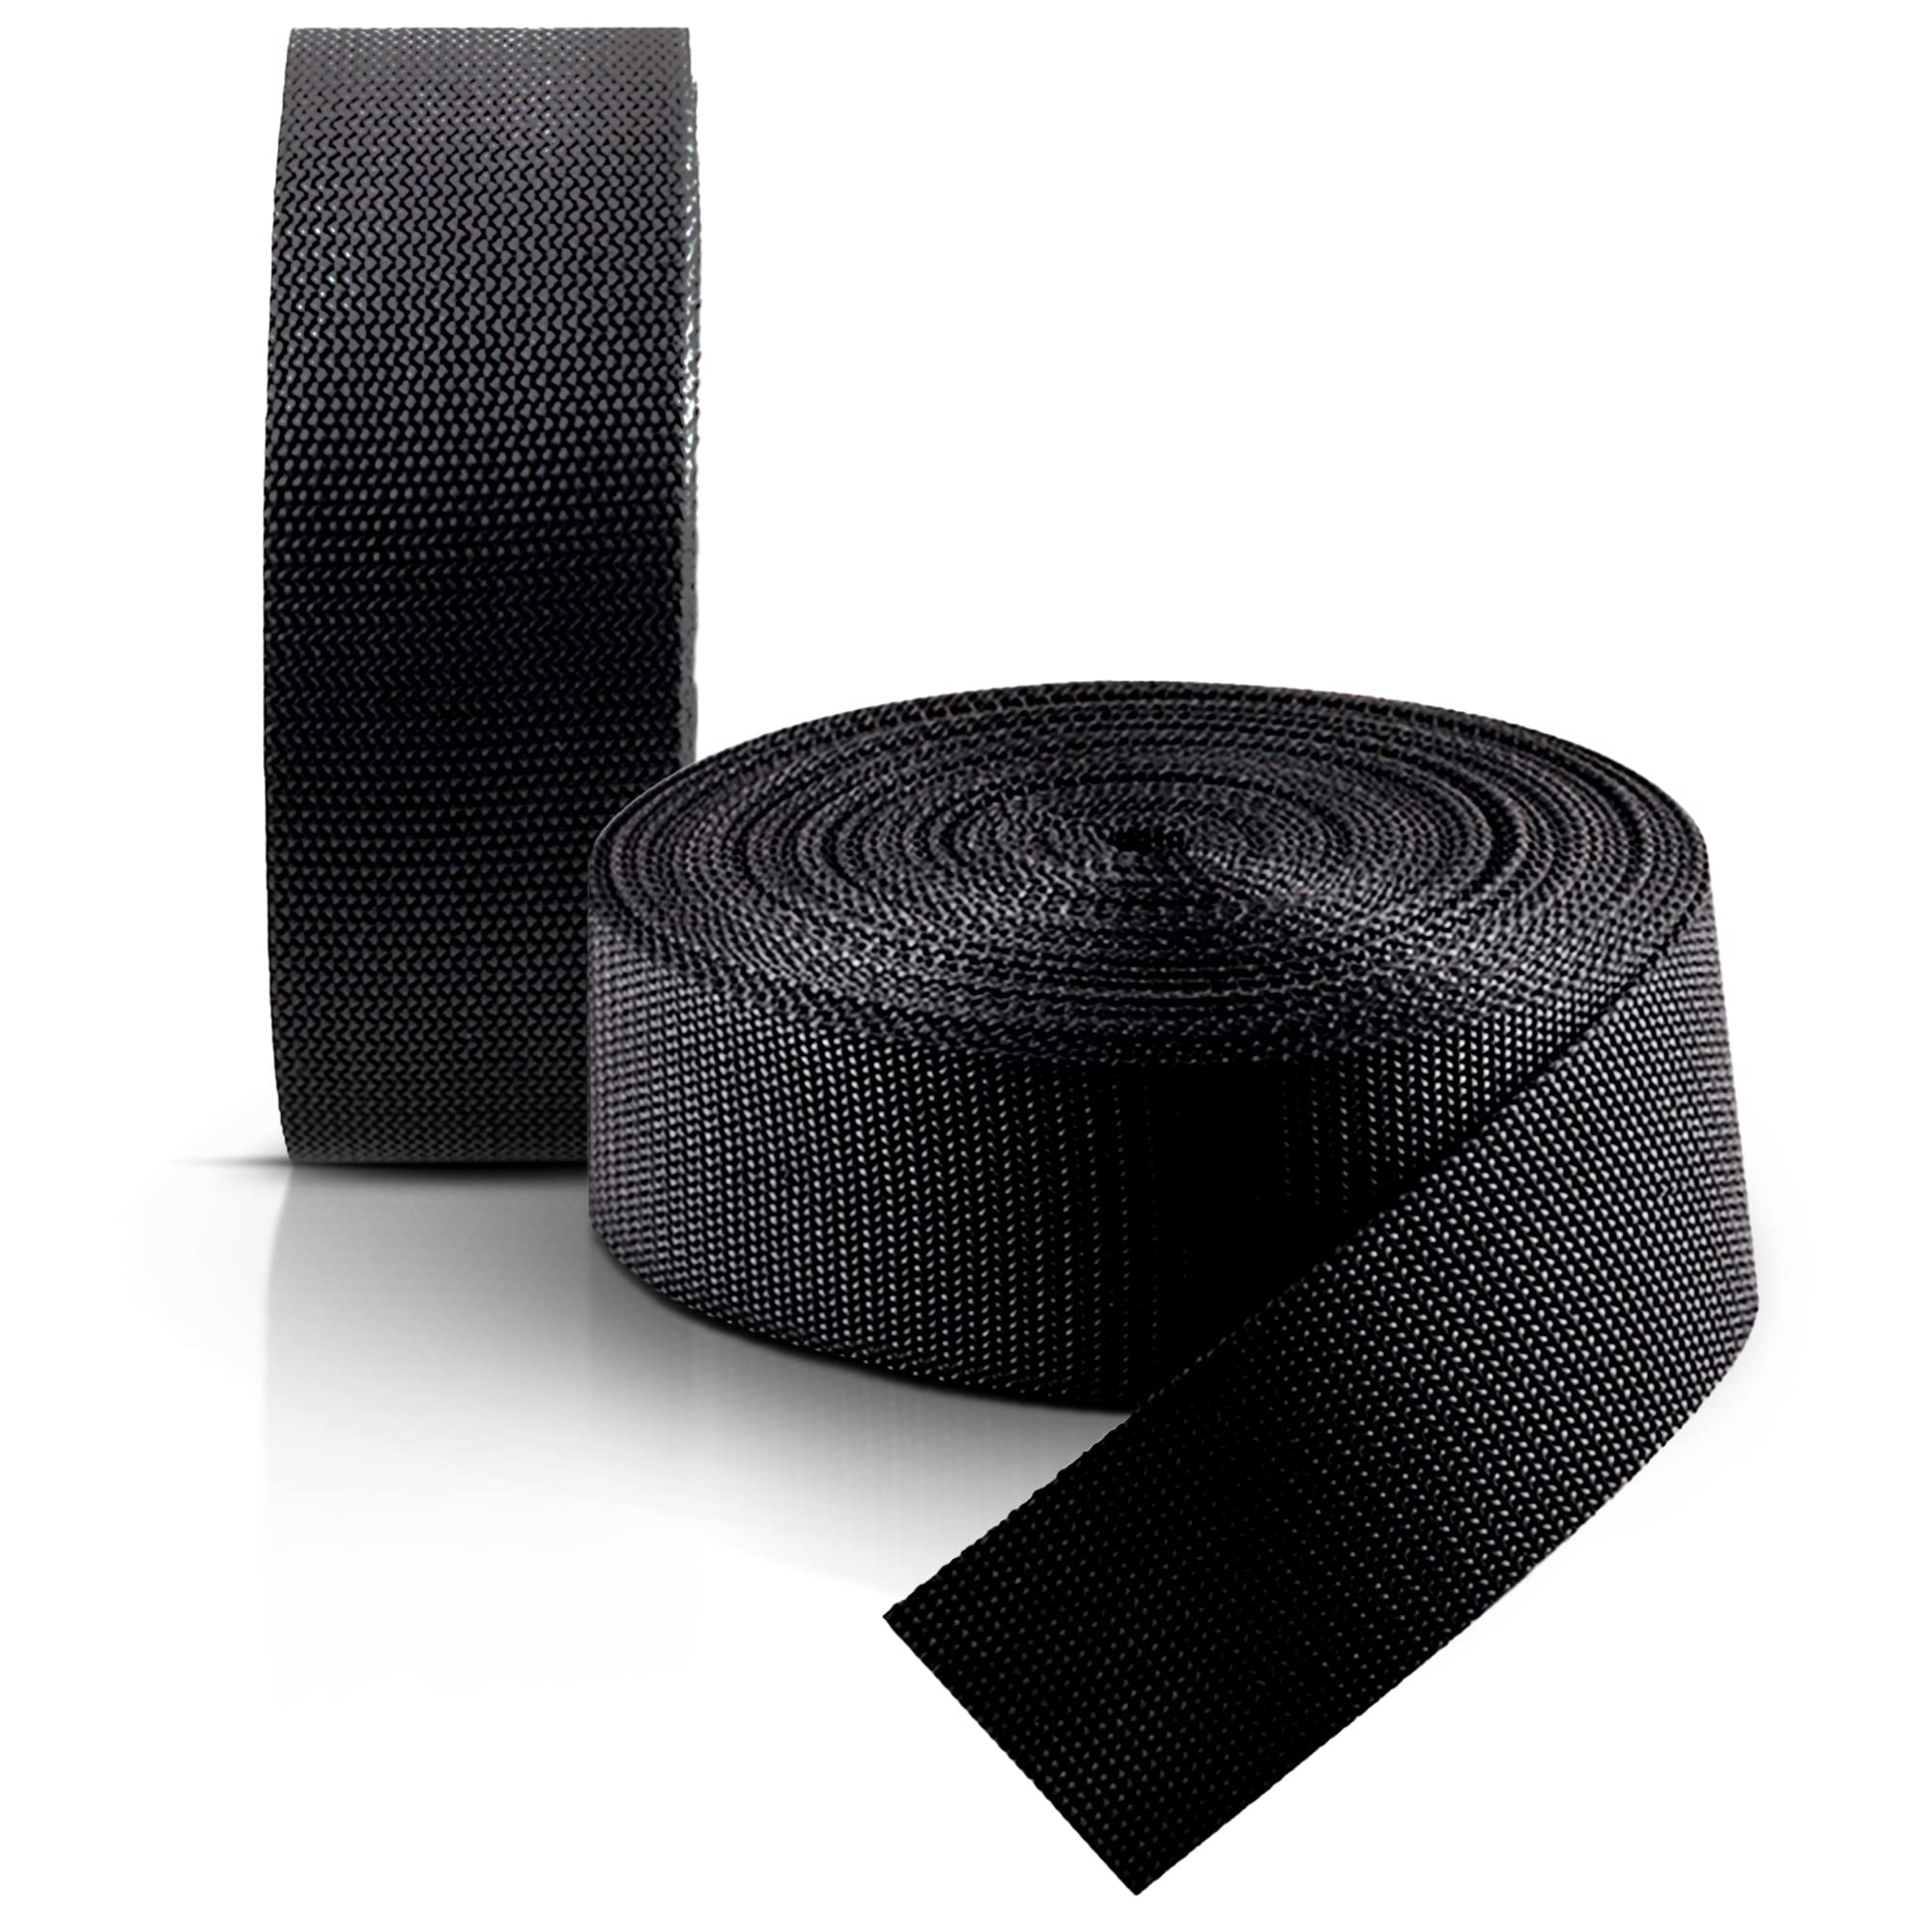 1 Inch Black Medium Weight Nylon Webbing 1 width nylon 5 yards